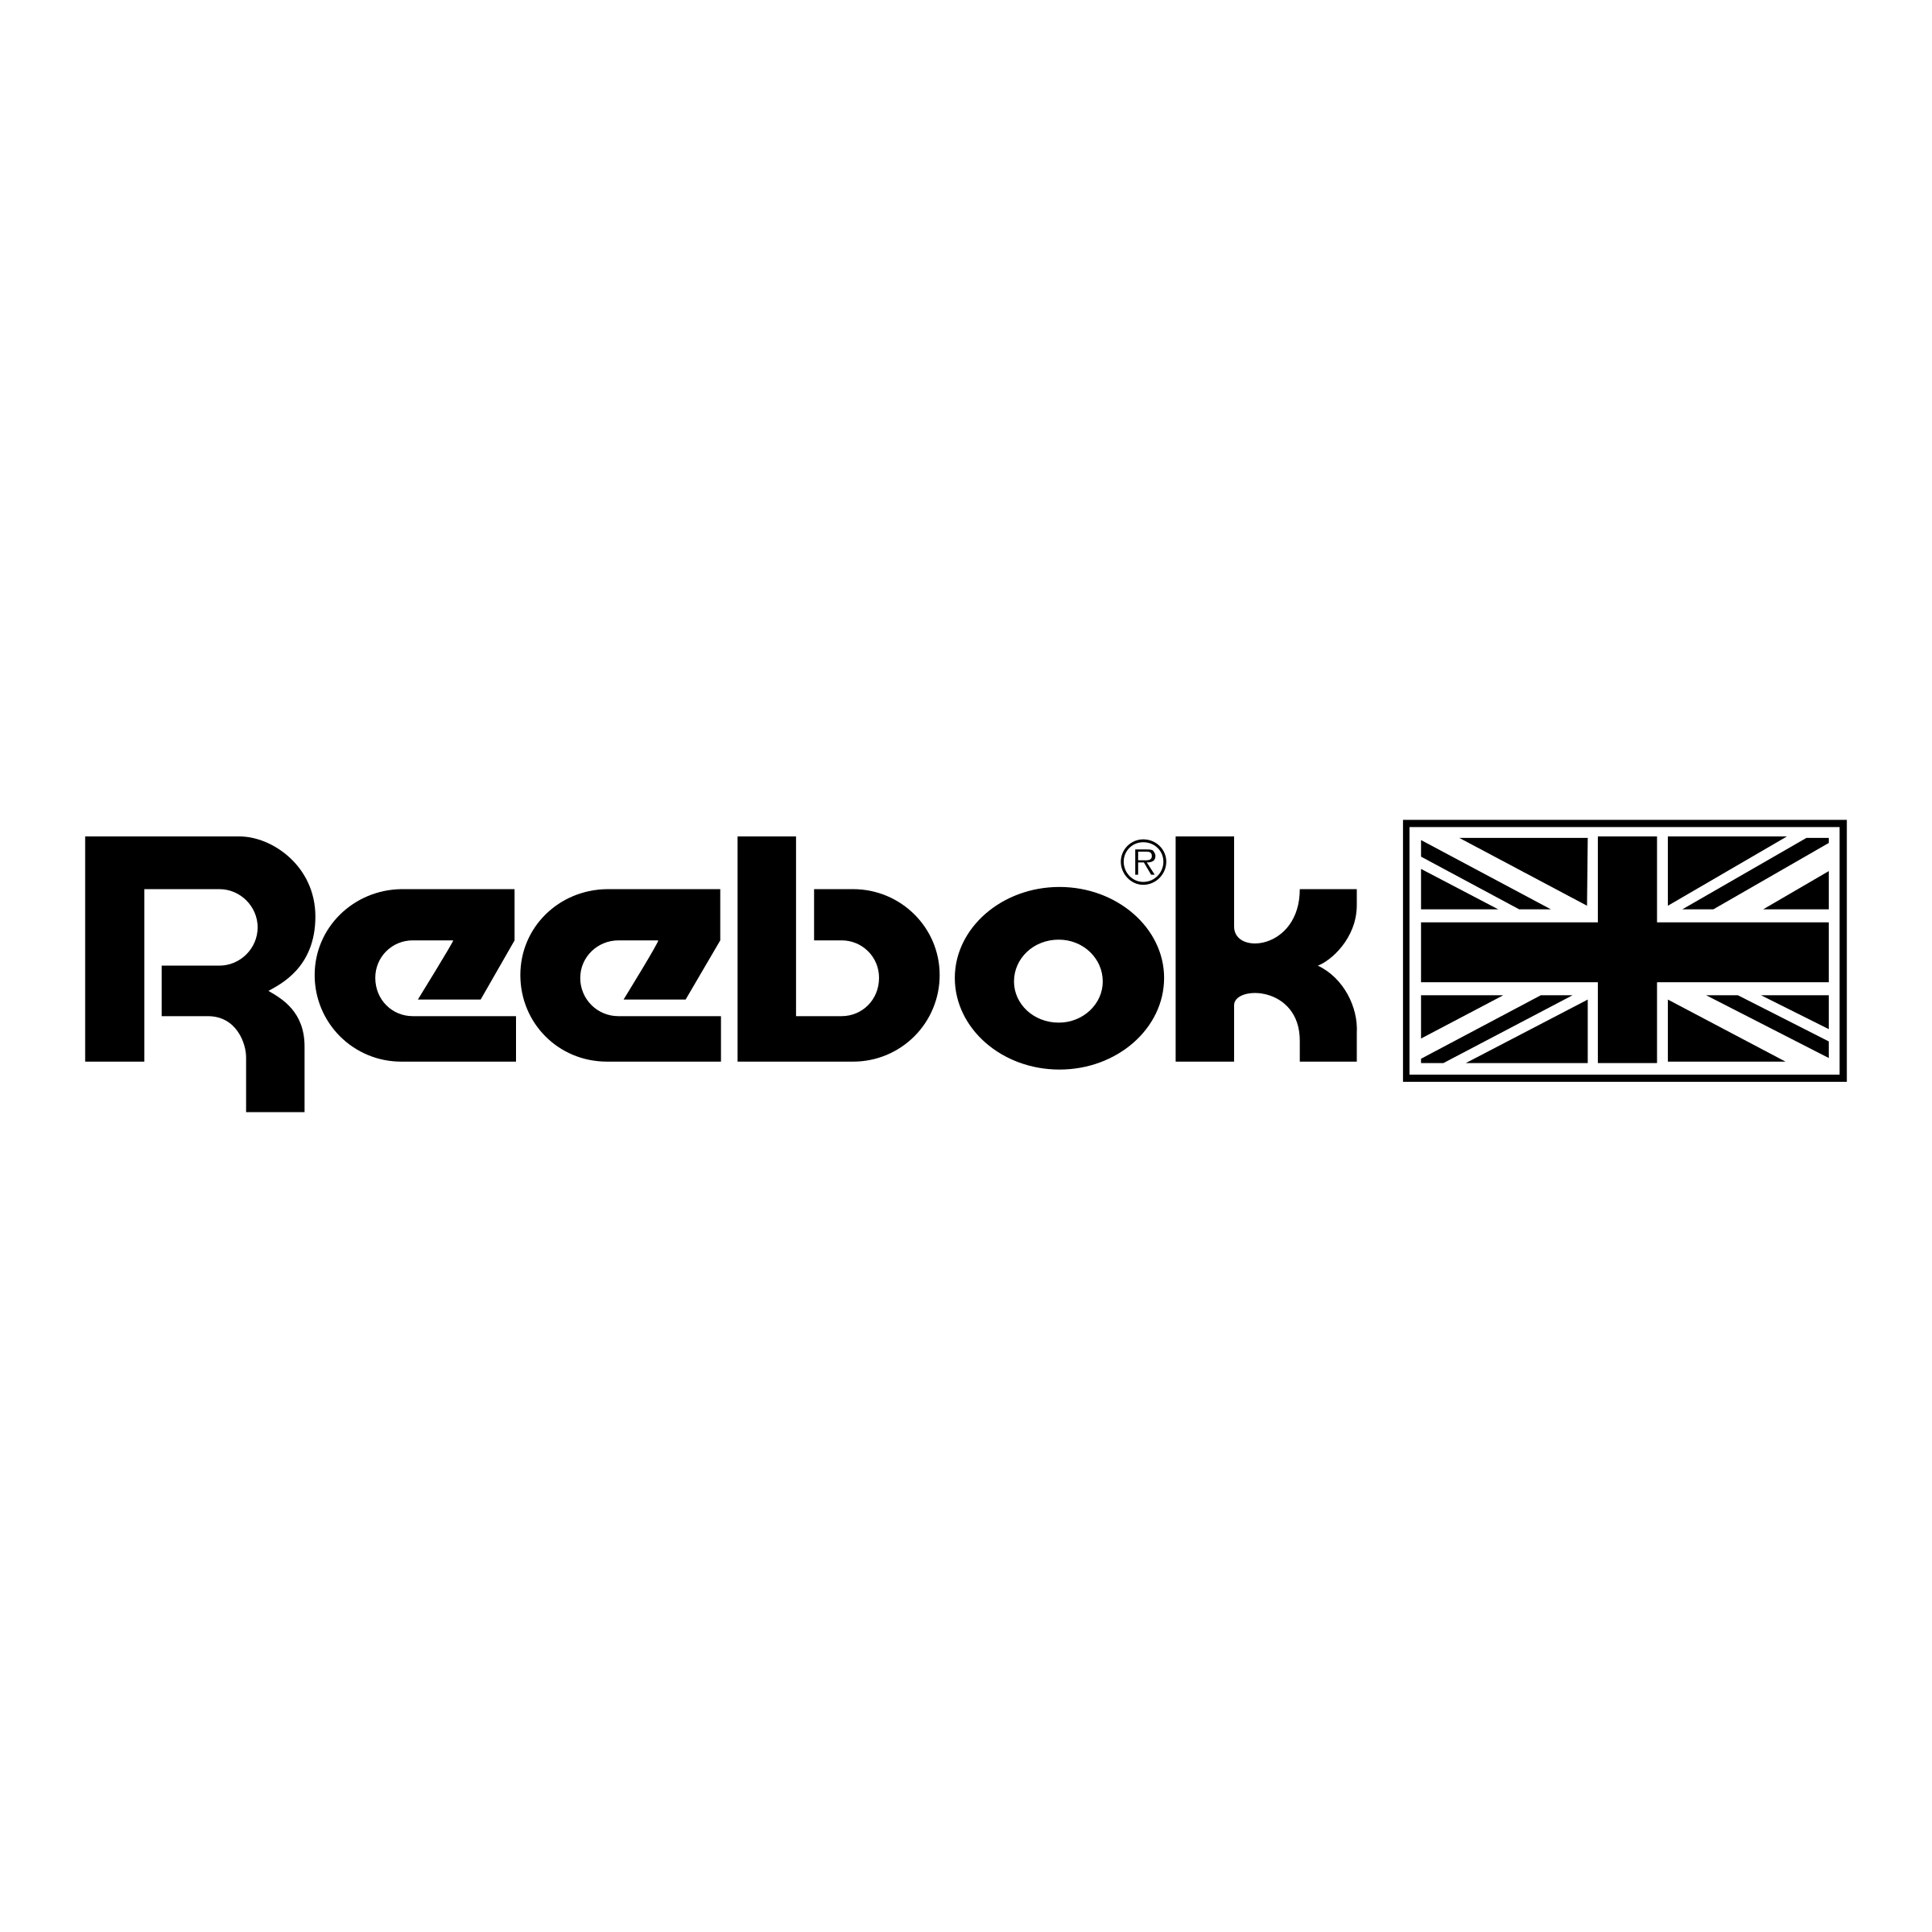 Reebok Supply Logo - Reebok Logo PNG Transparent & SVG Vector - Freebie Supply